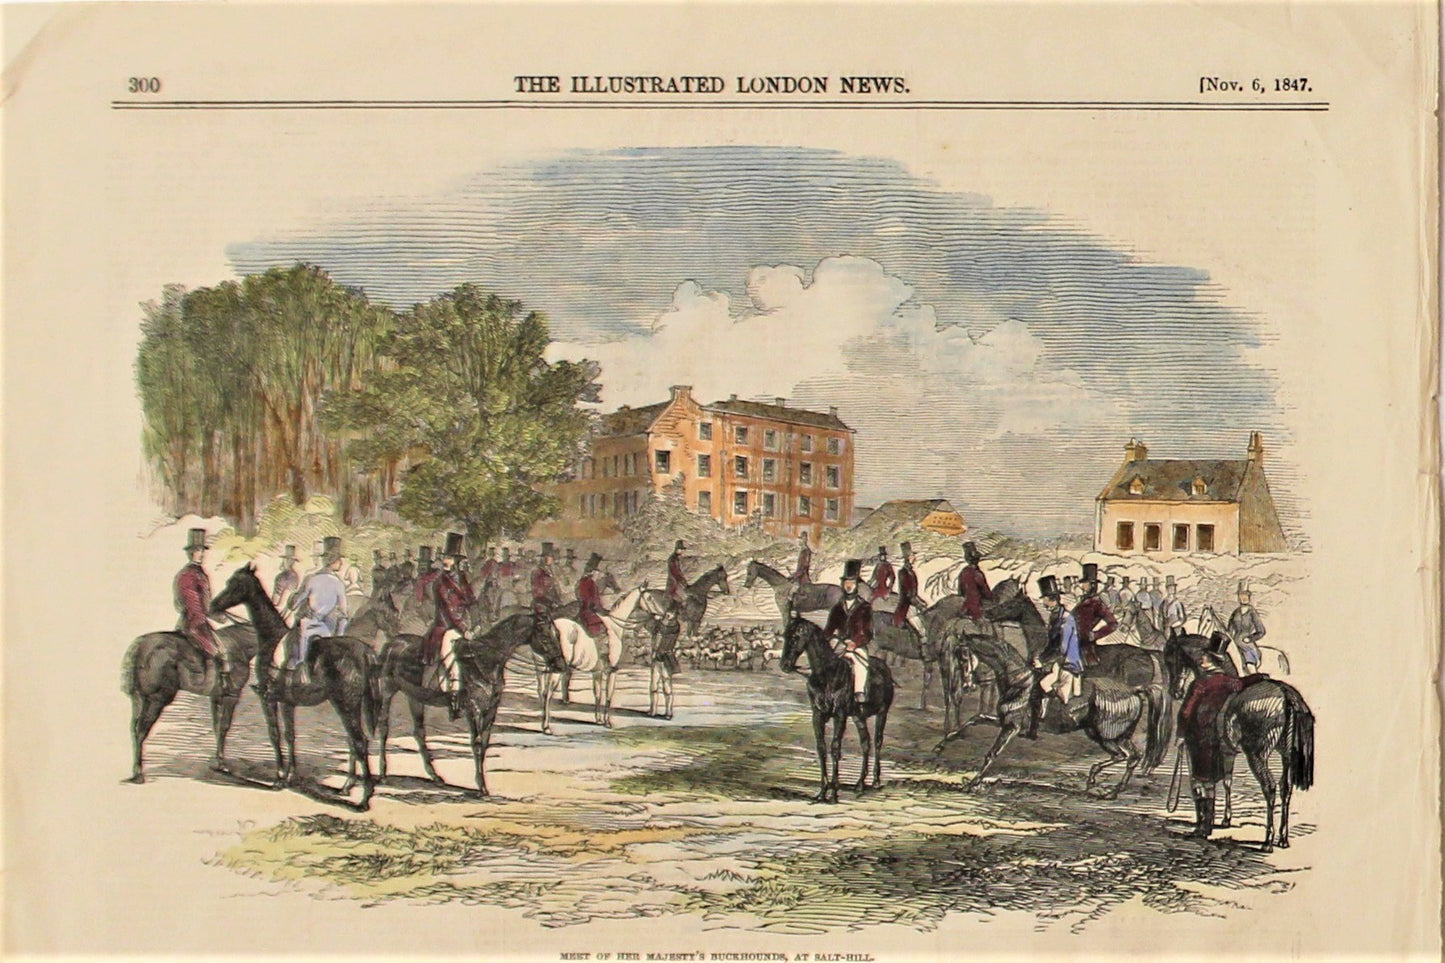 Sporting, Equestrian, Meet of Her Majesty's Buckhounds at Salt-Hill, 1847